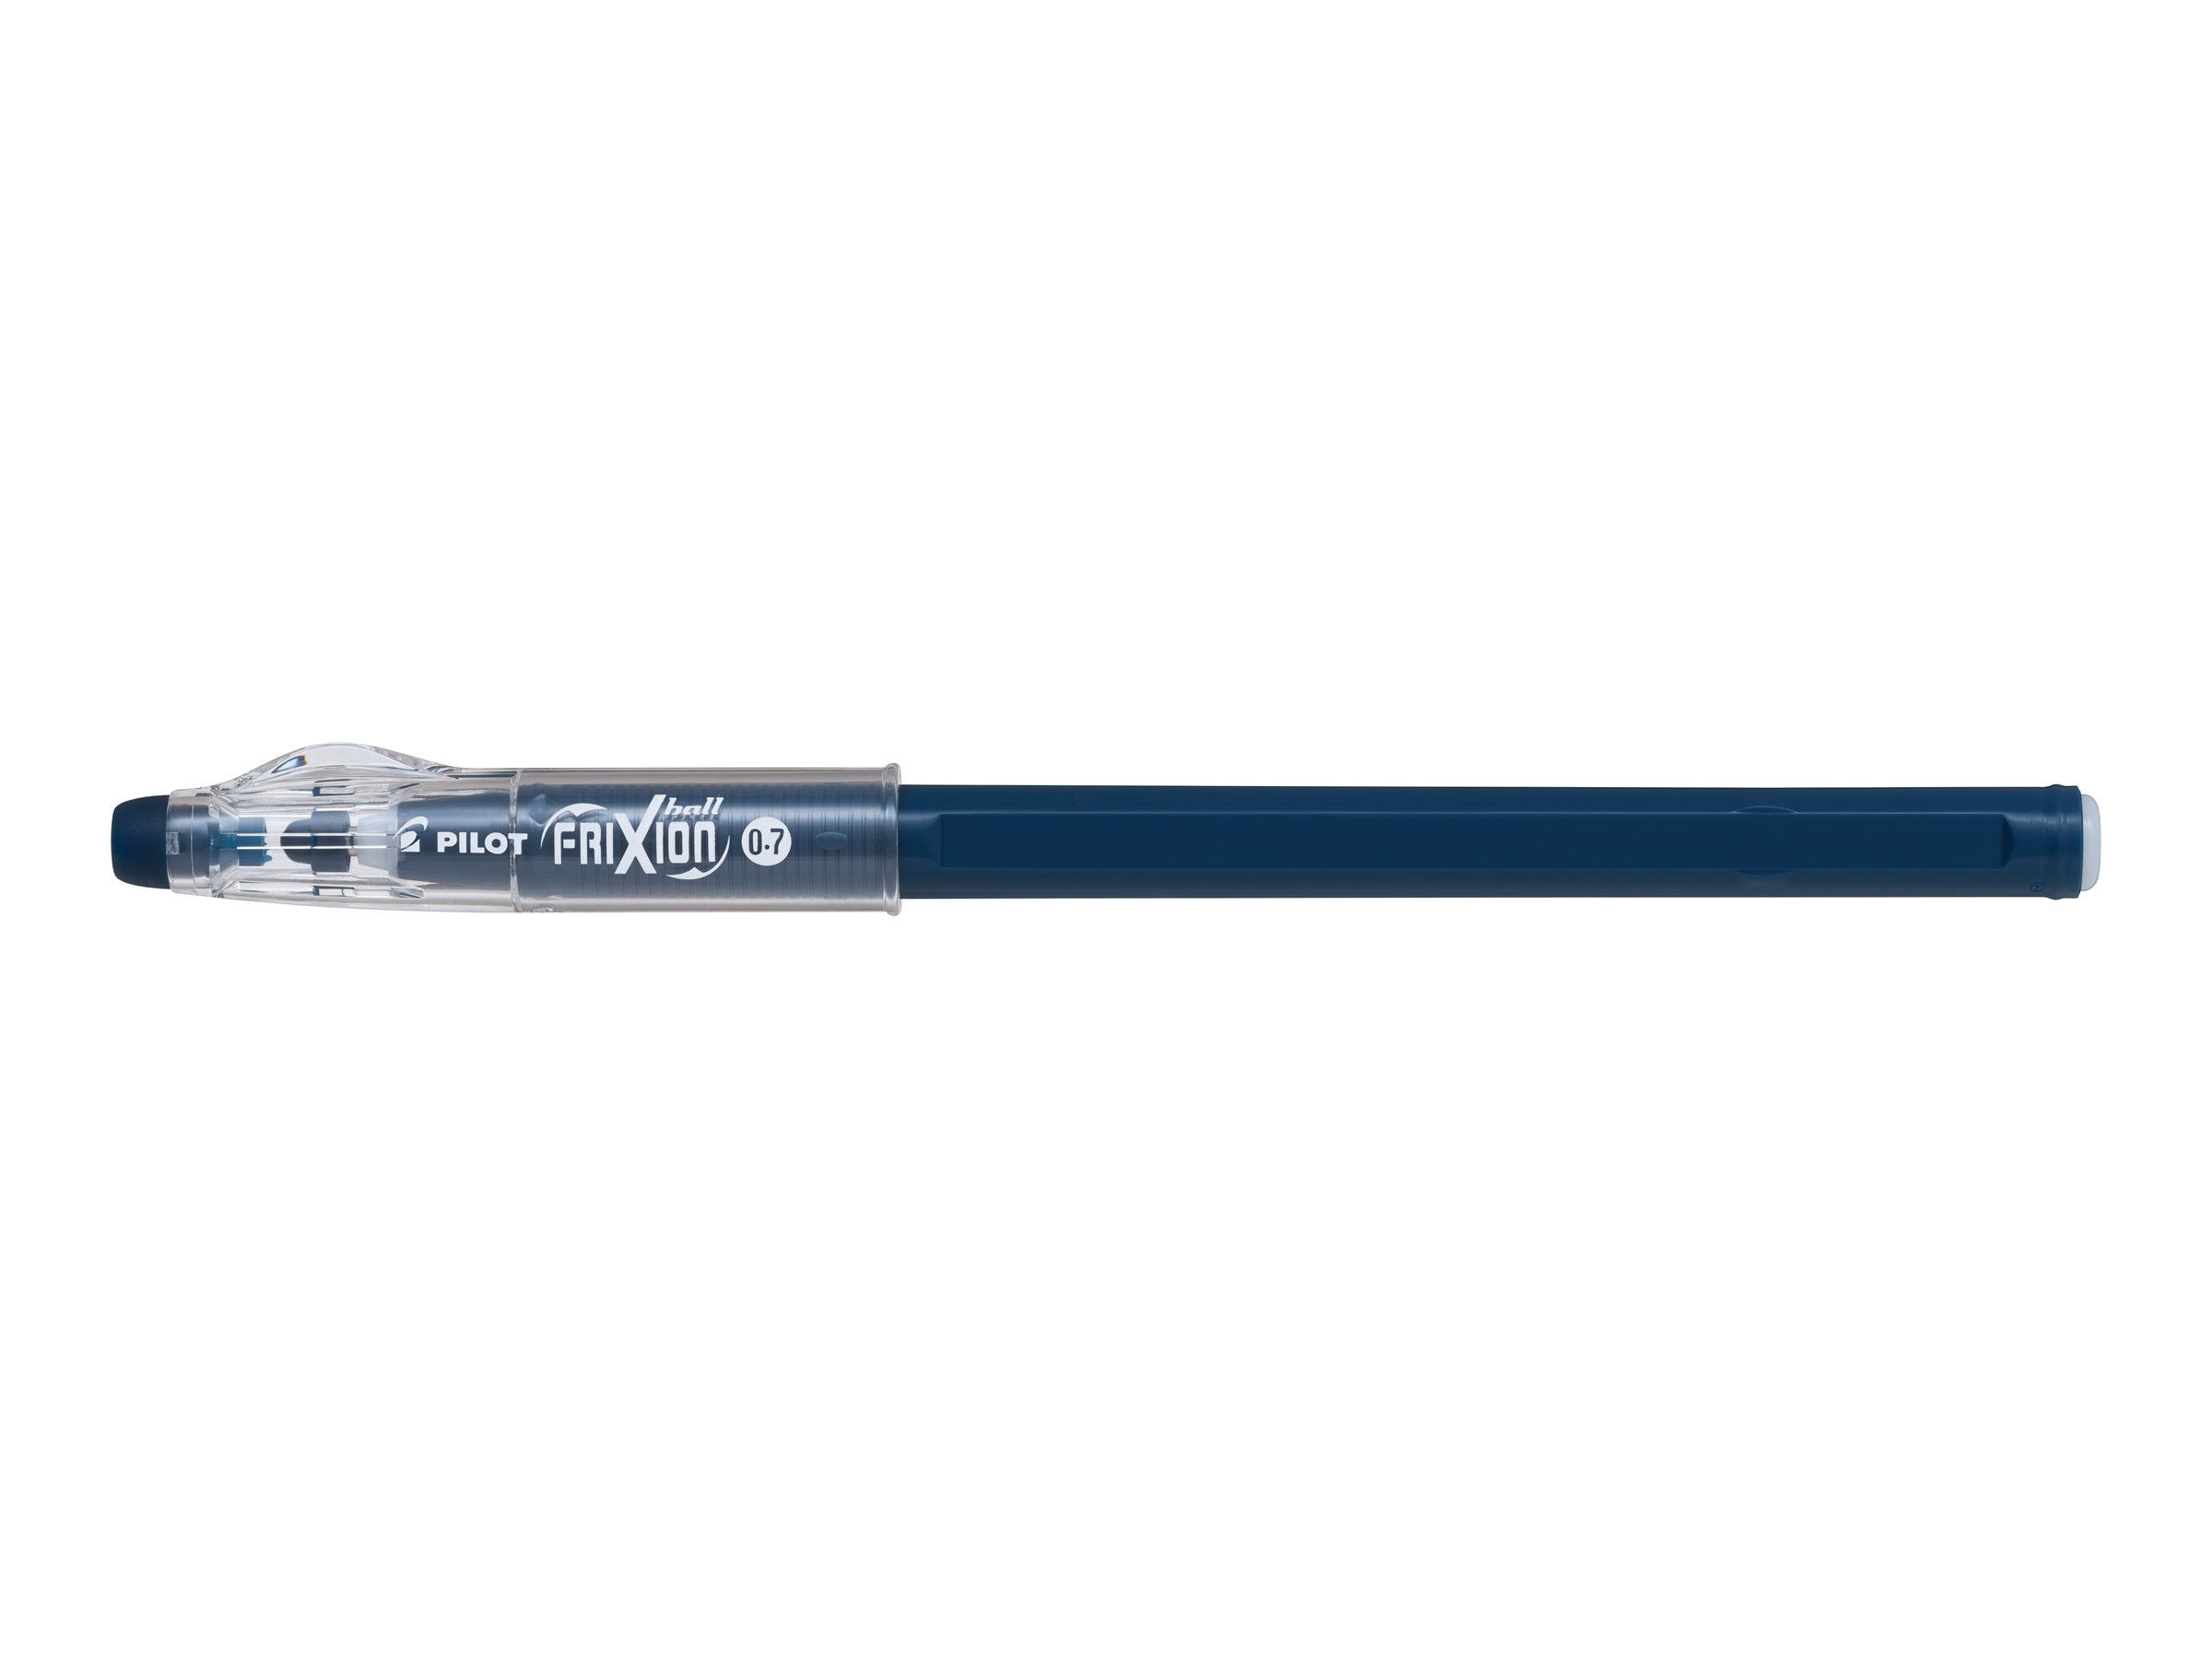  PILOT - Pilot Recharge pour stylo roller FRIXION BALL 10, bleu  : Office Products